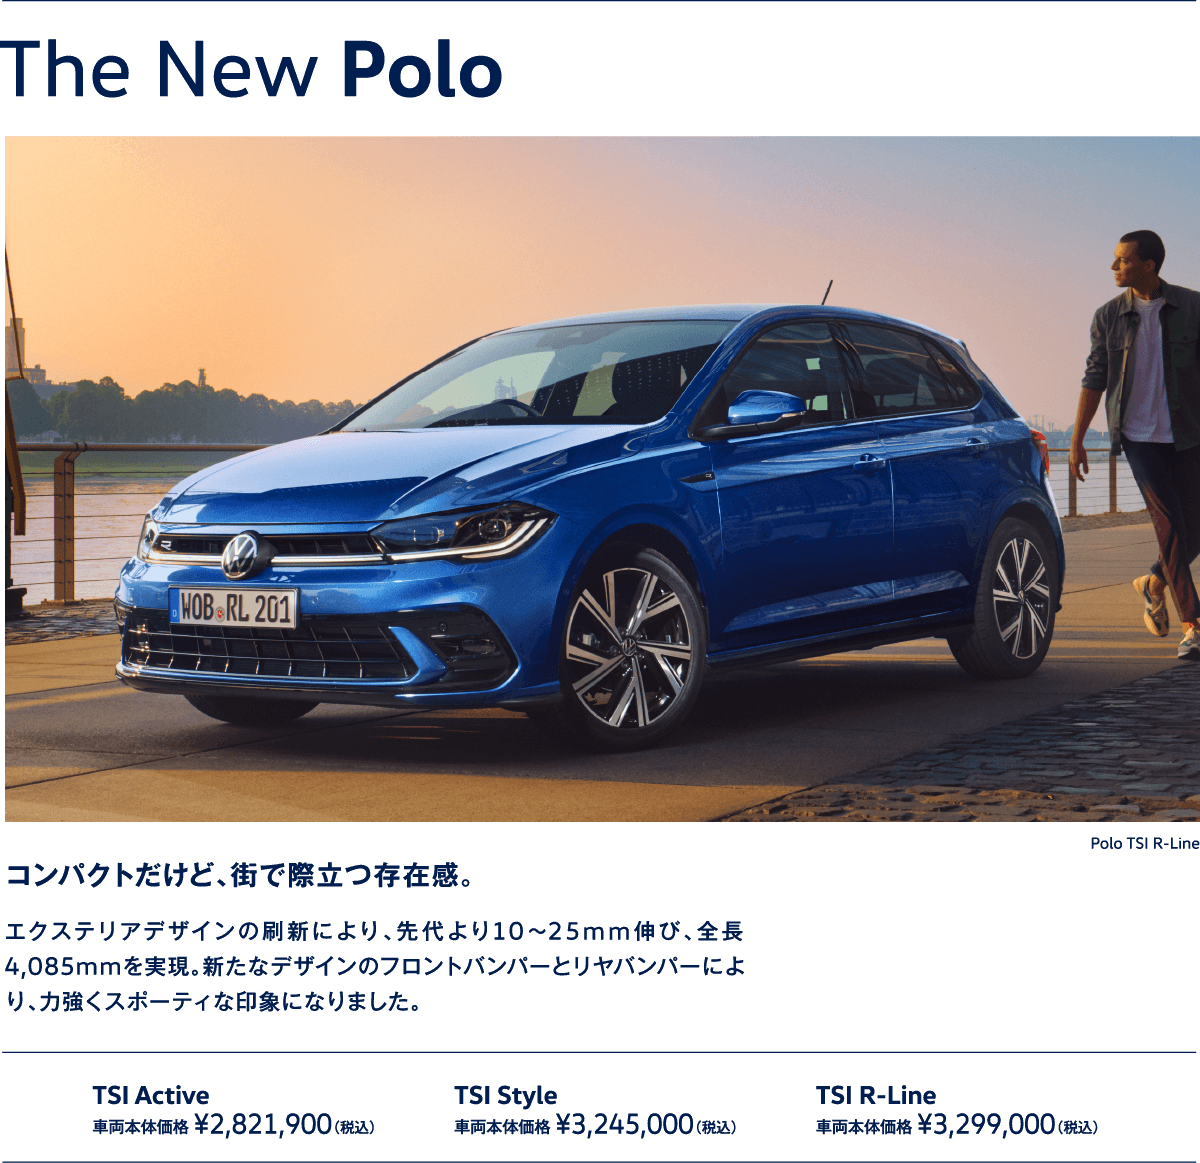 The New Polo